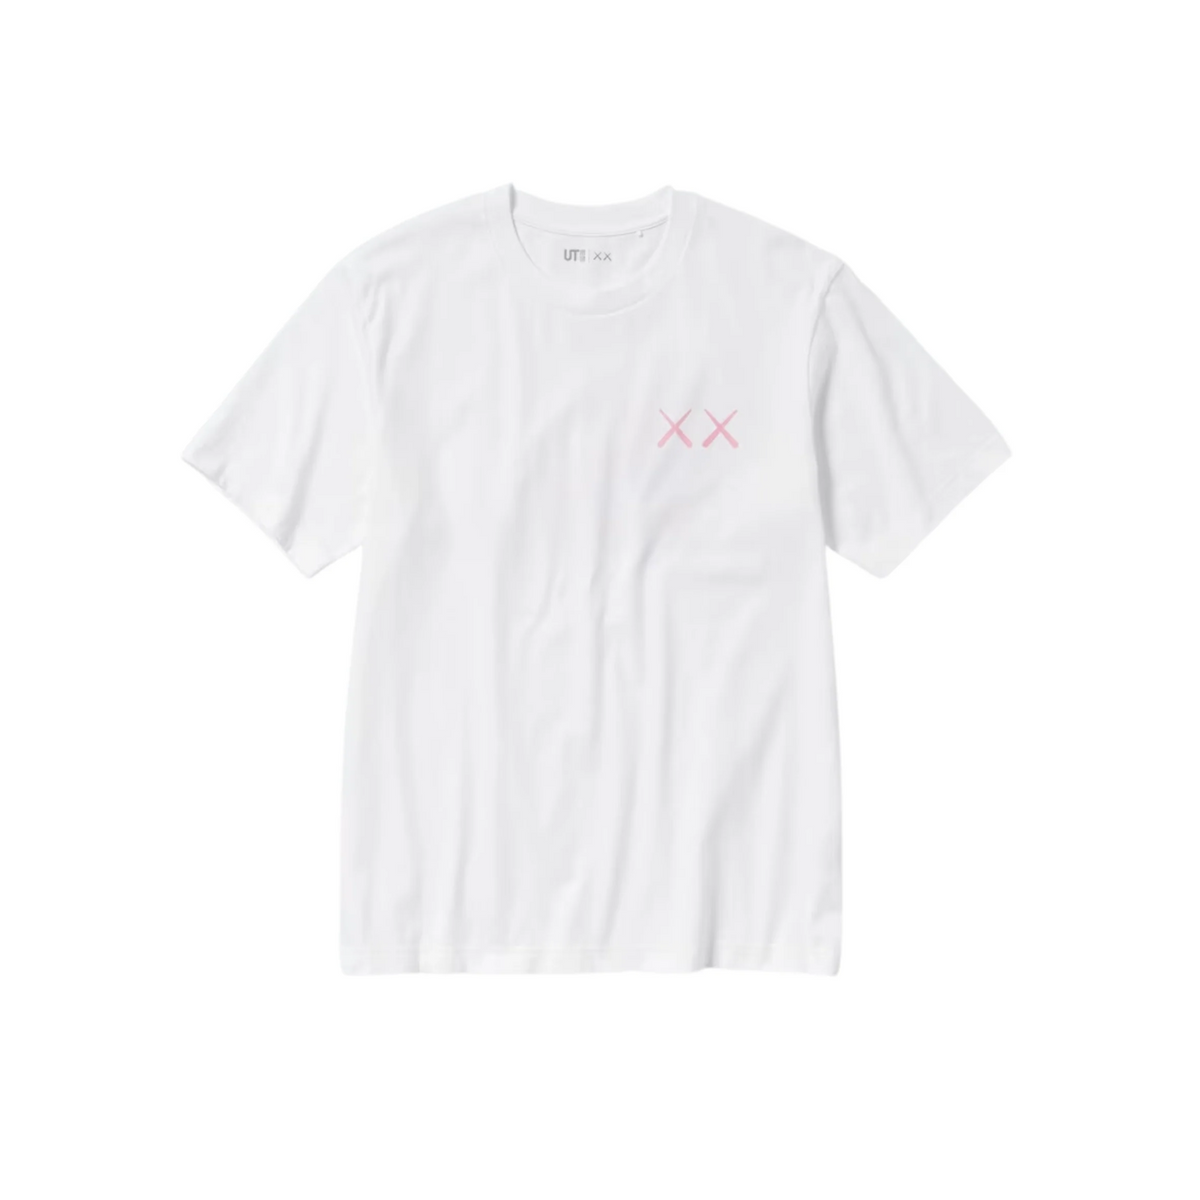 KAWS x Uniqlo UT Short Sleeve Graphic T-shirt "White"